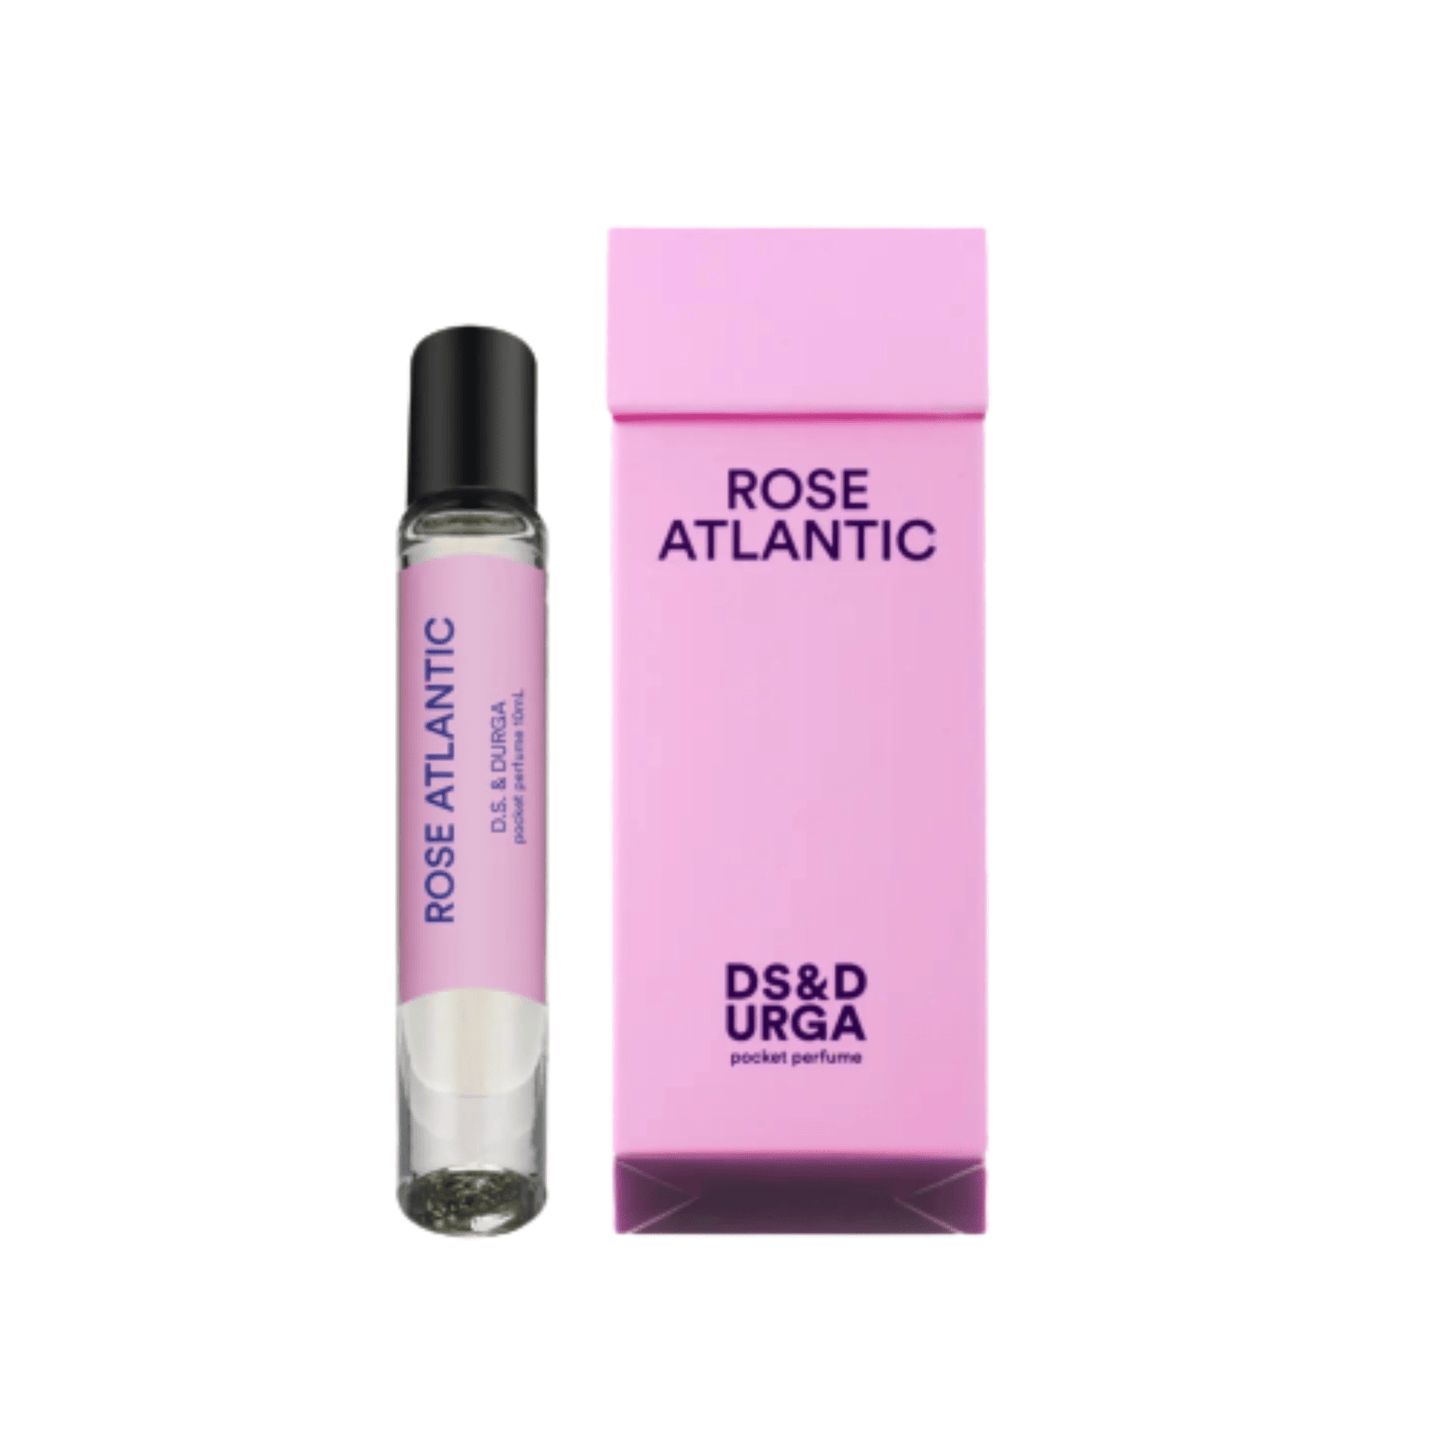 Primary Image of Pocket Perfume - Rose Atlantic Roll-On Oil 